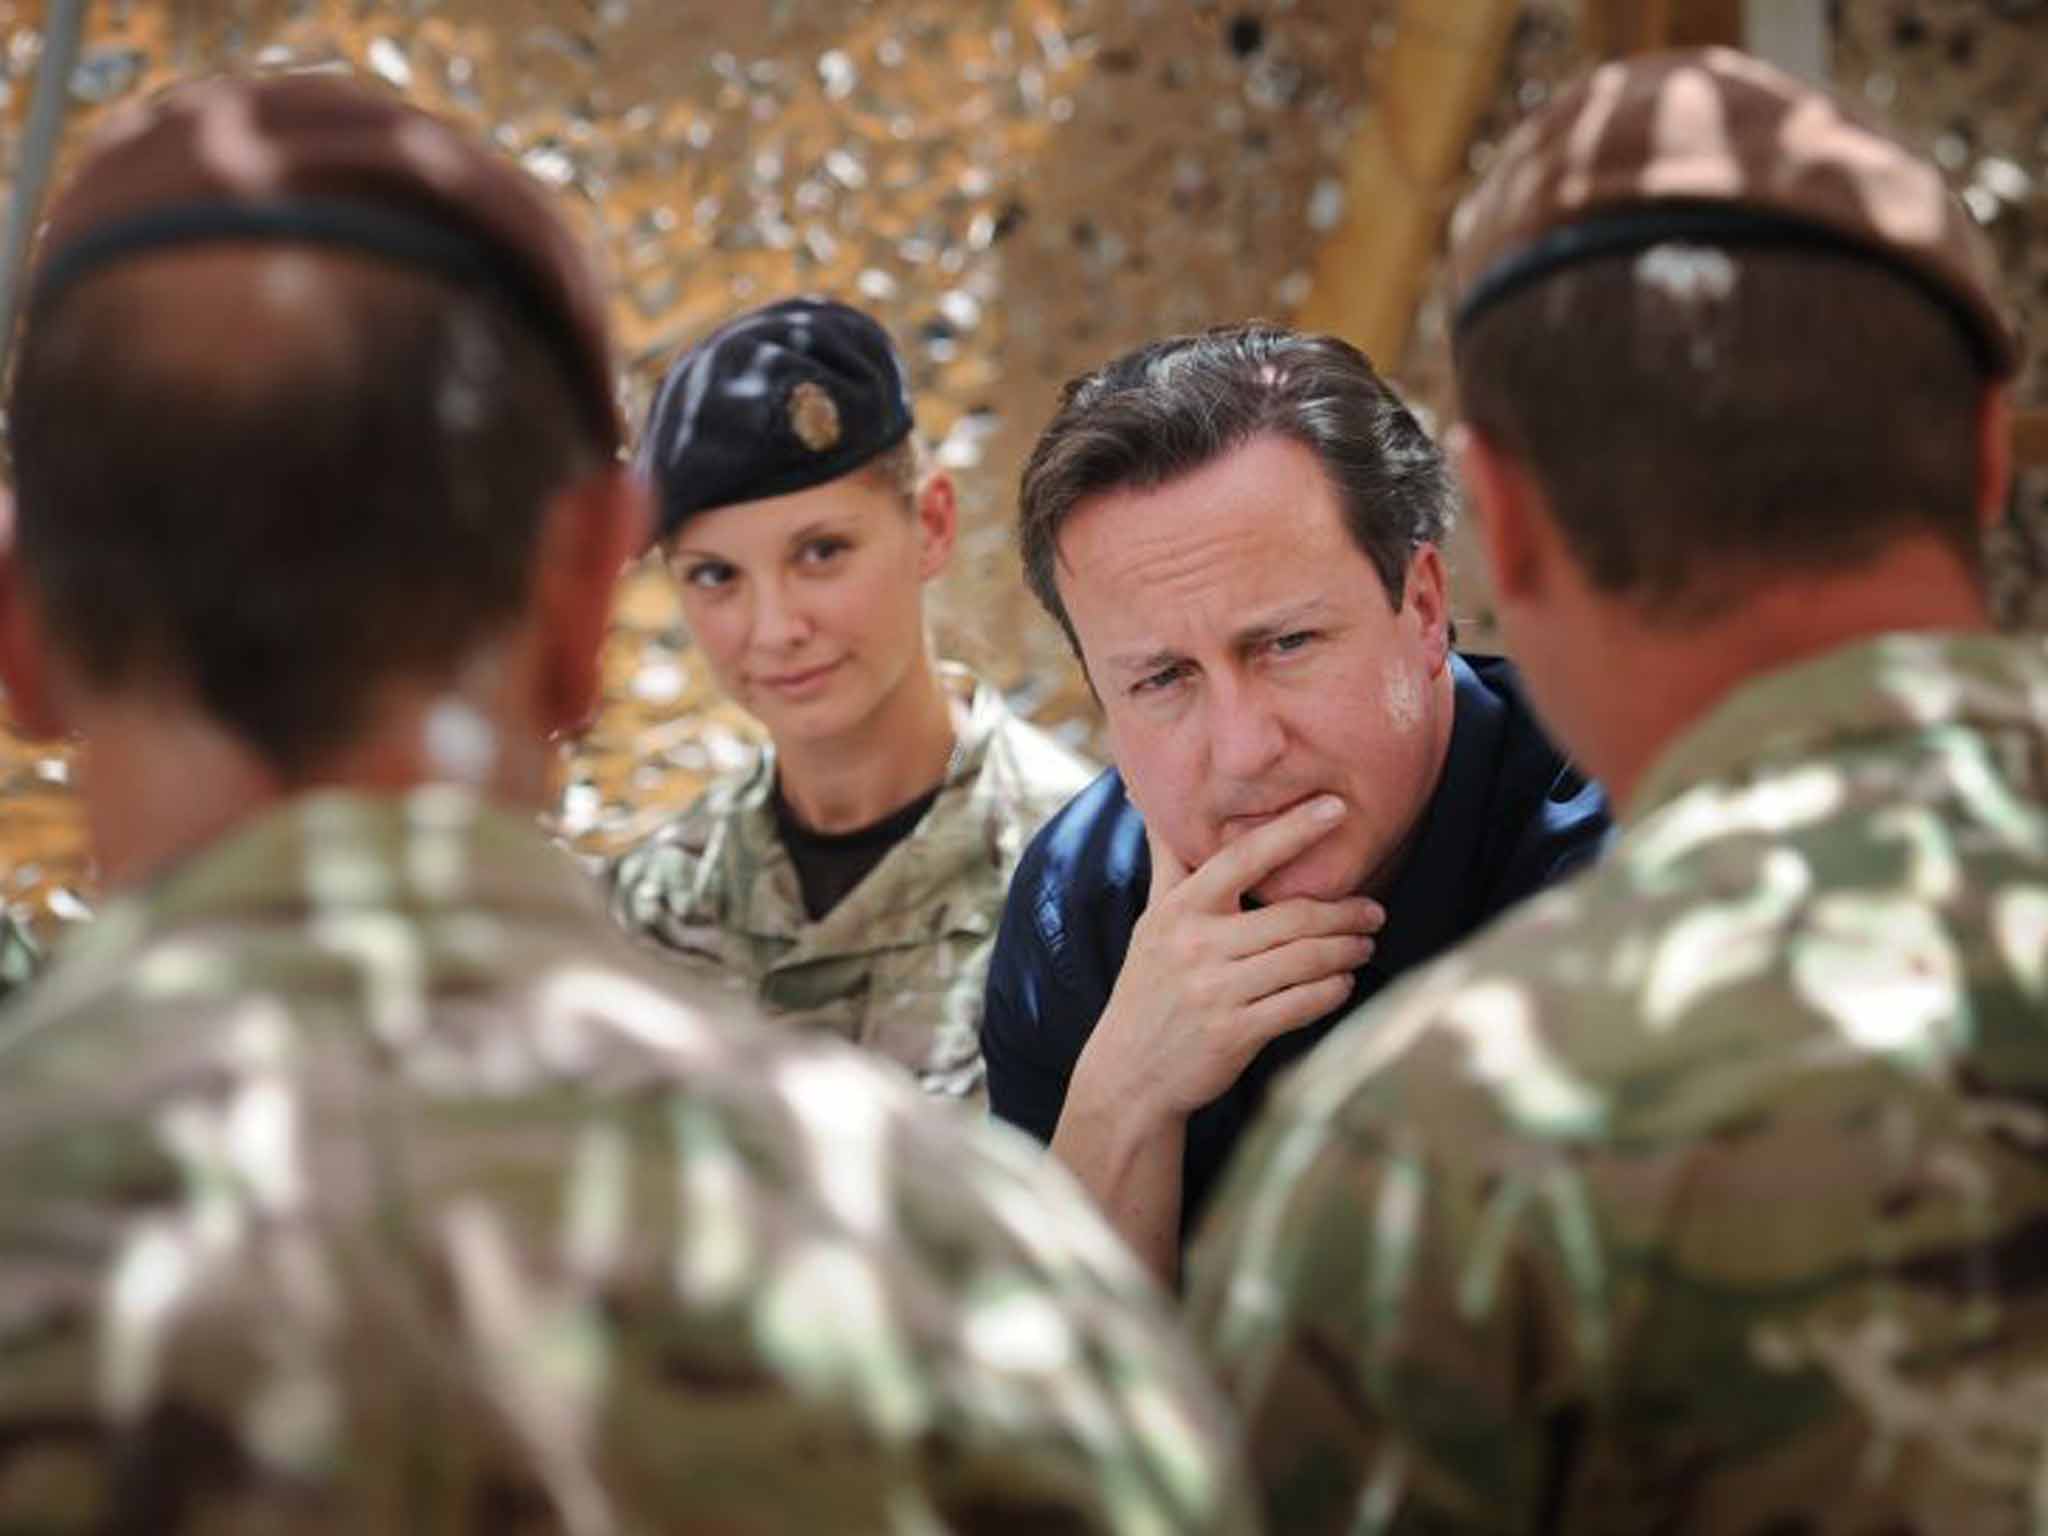 David Cameron meets British troops in Afghanistan in 2013